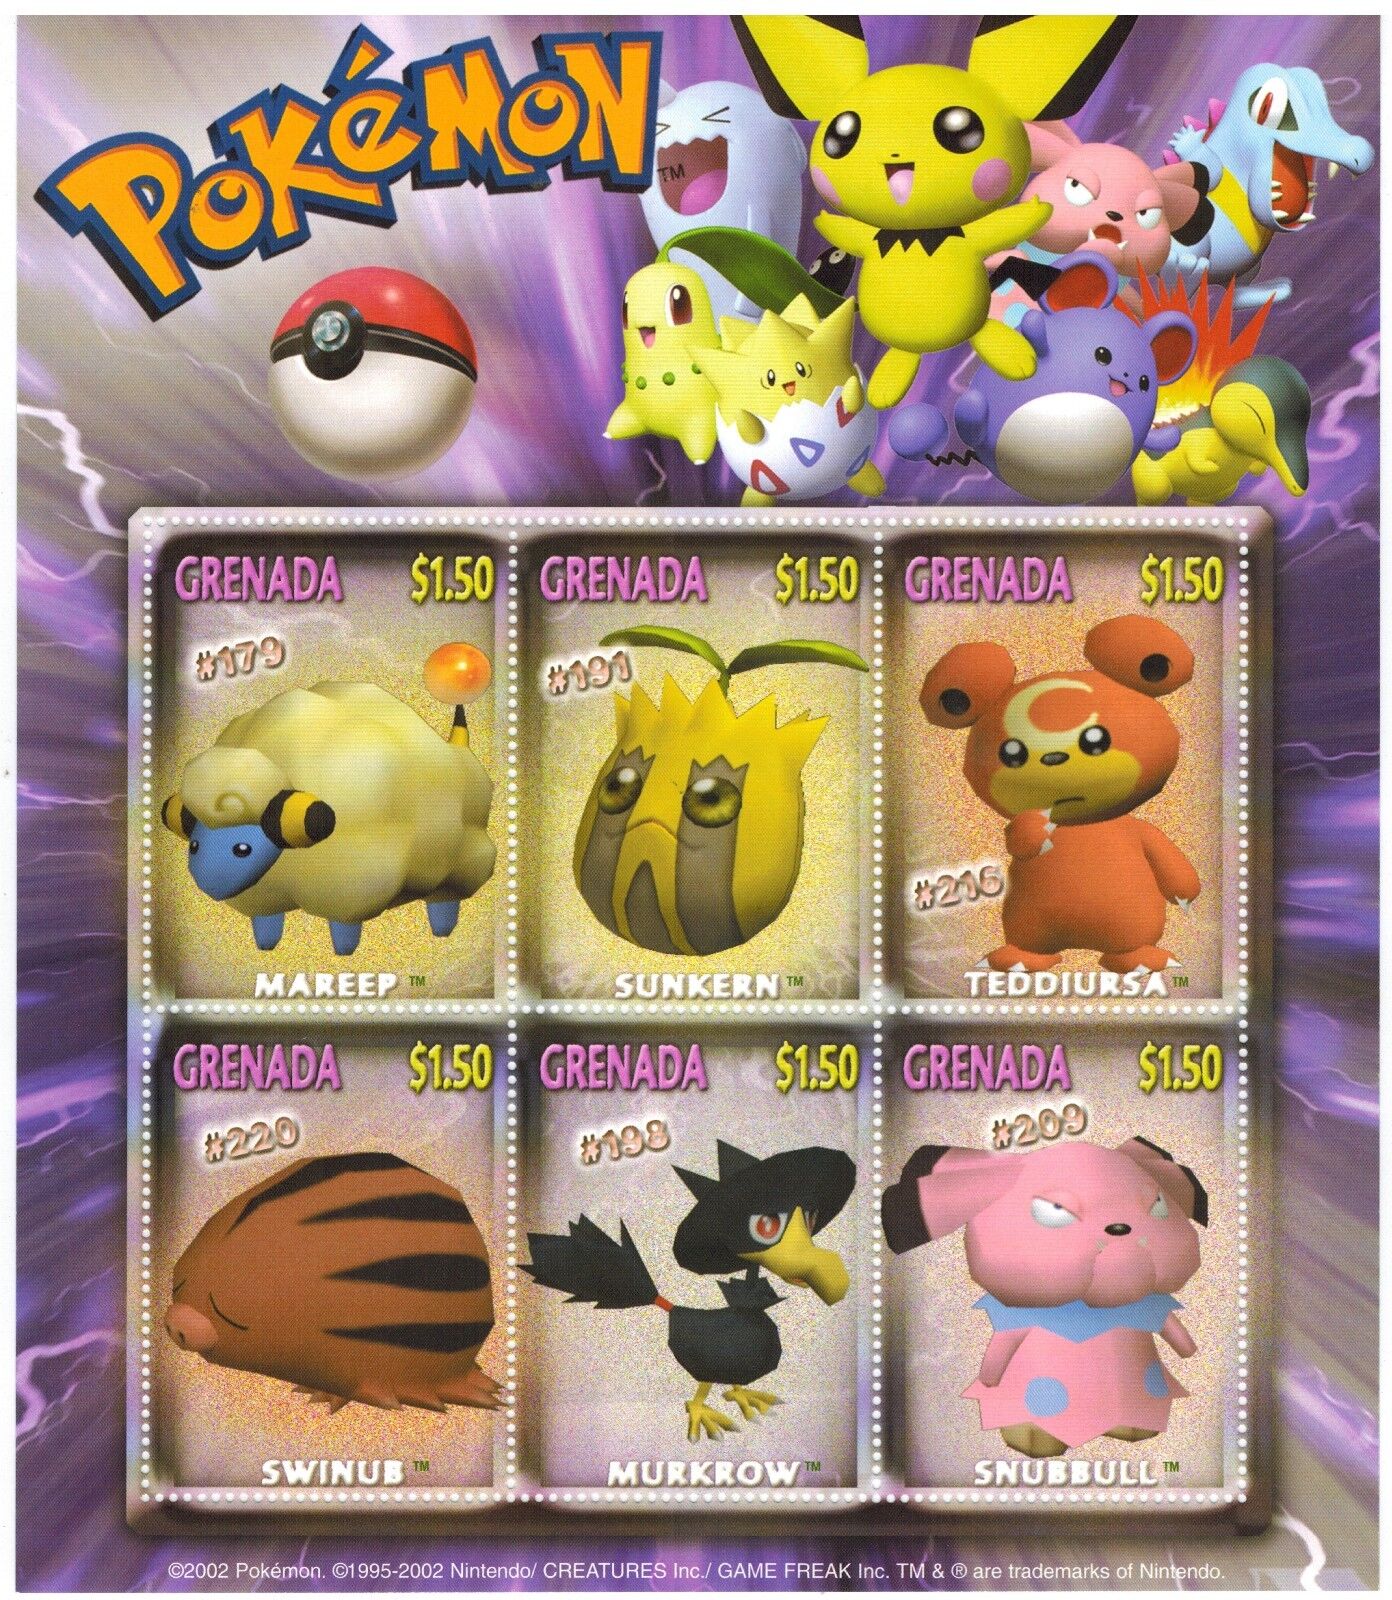 Grenada 2002 - Pokemon - Sheet of 6 Collectible Postage Stamps - Scott #3269 MNH